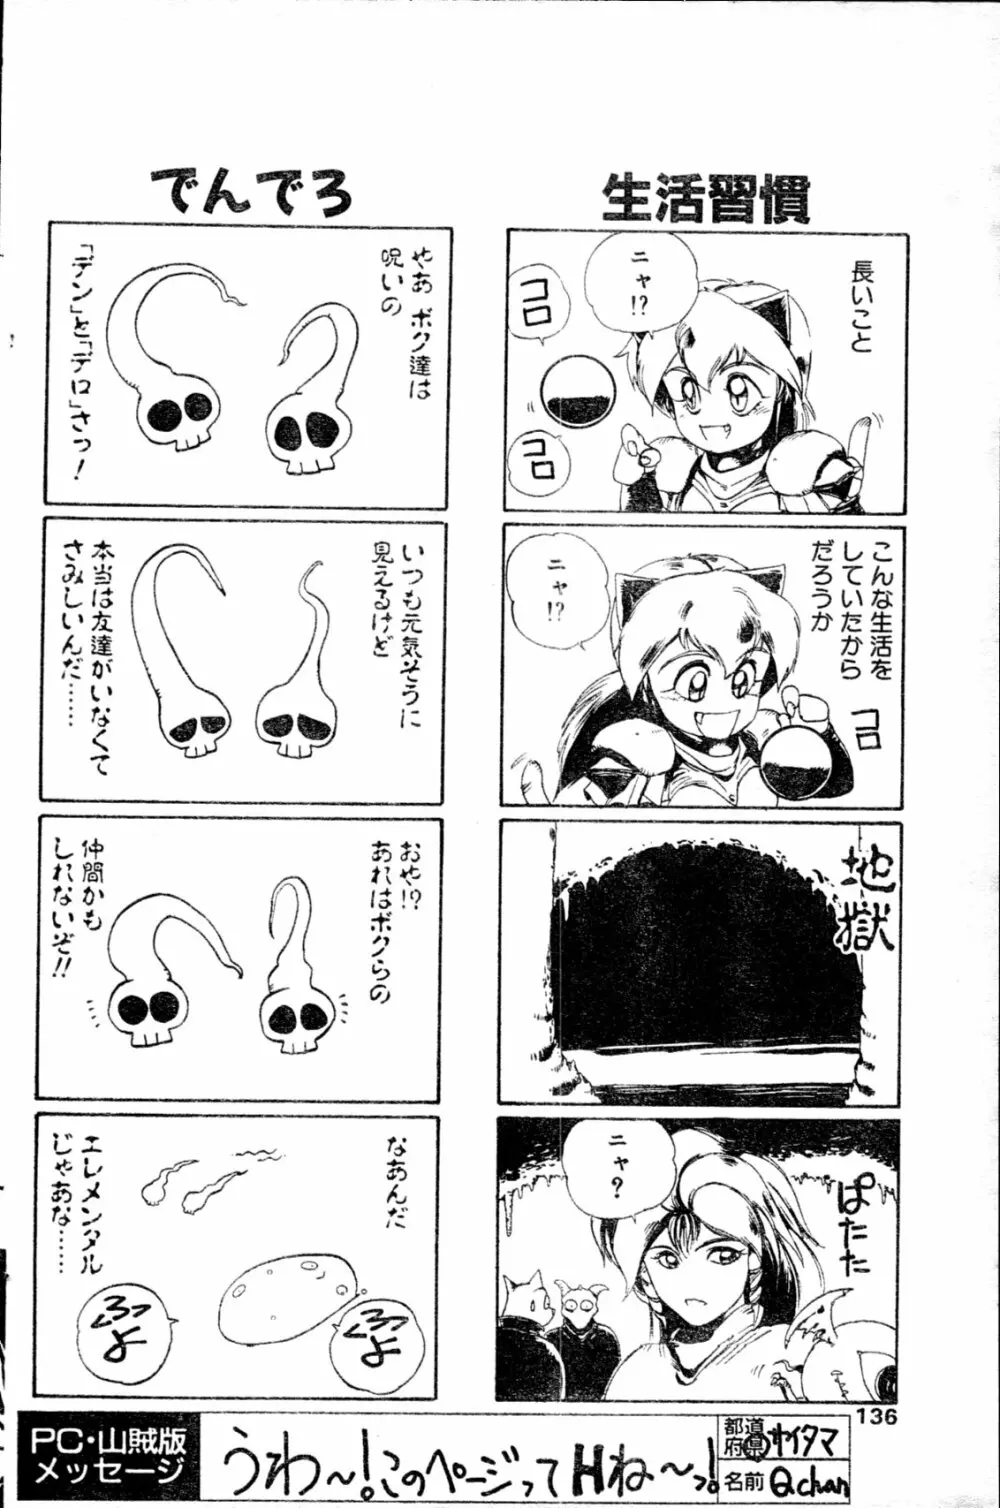 COMIC ペンギンクラブ山賊版 1991年12月号増刊 NARCIS3 幻超二&飛龍乱特集号 131ページ